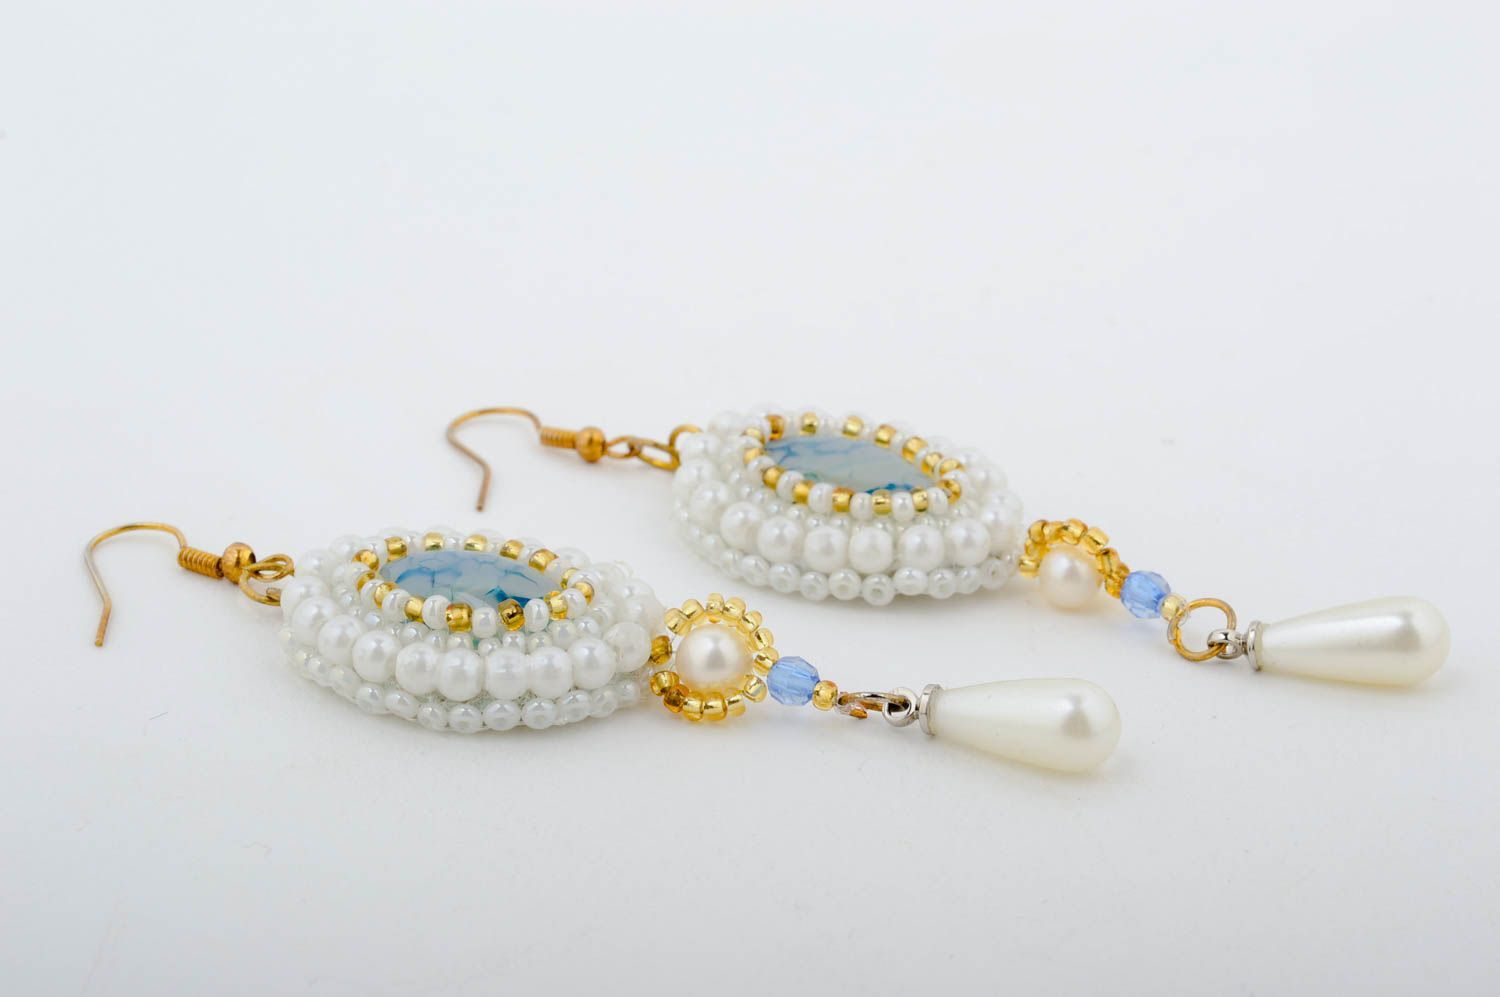 Handmade earrings unusual earrings stone earrings unusual gift for girl photo 3